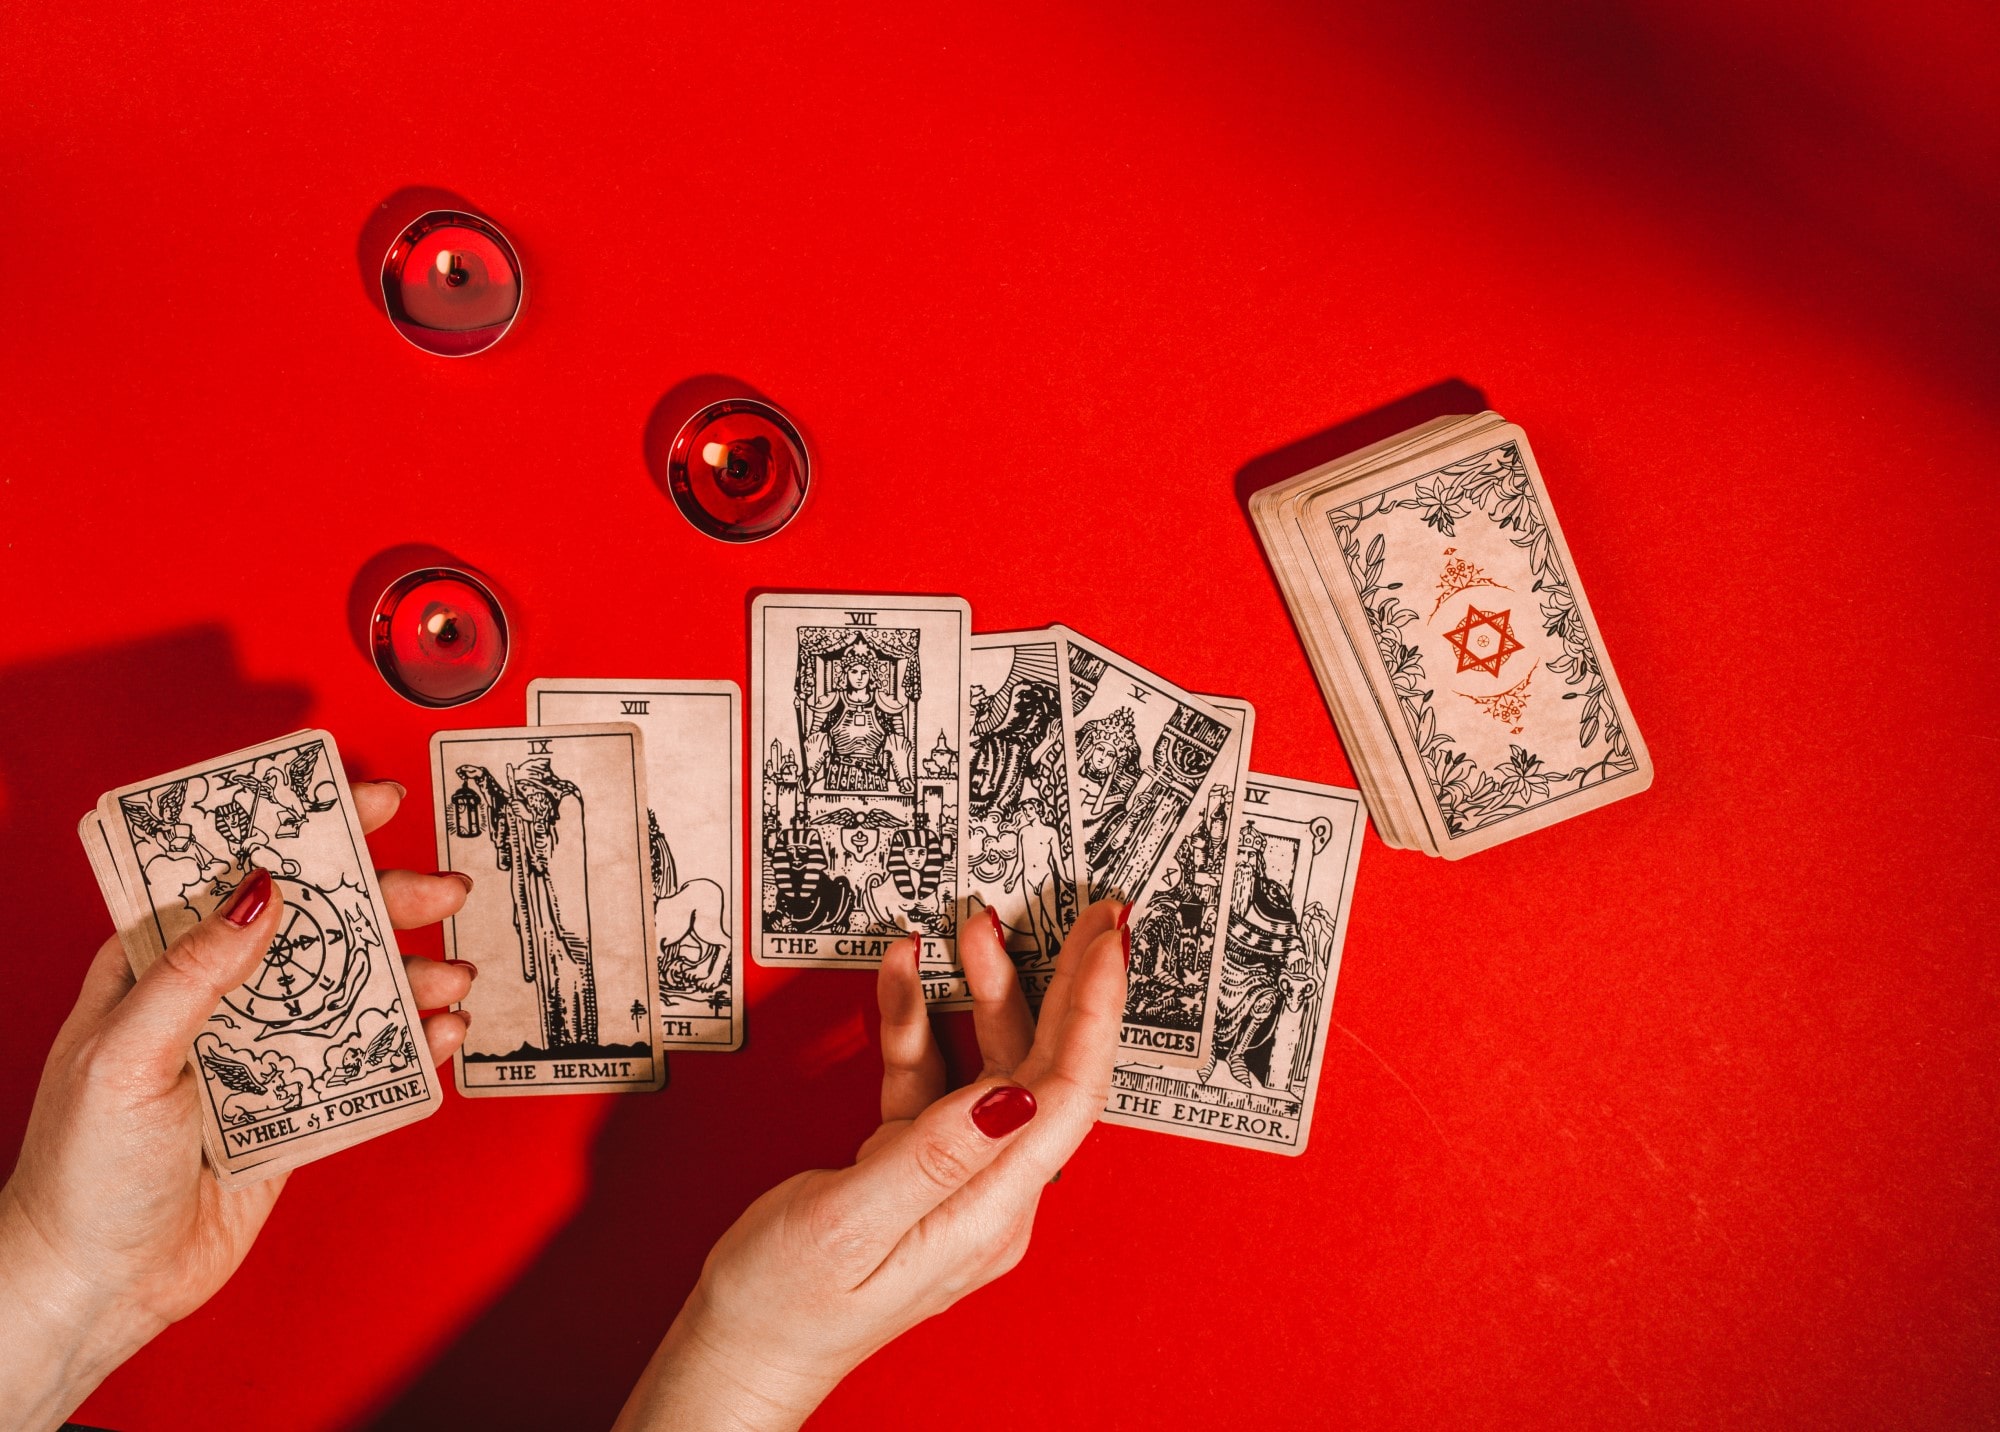 tarot cards and female hands of fortune teller on 2021 12 10 18 51 46 utc min 1